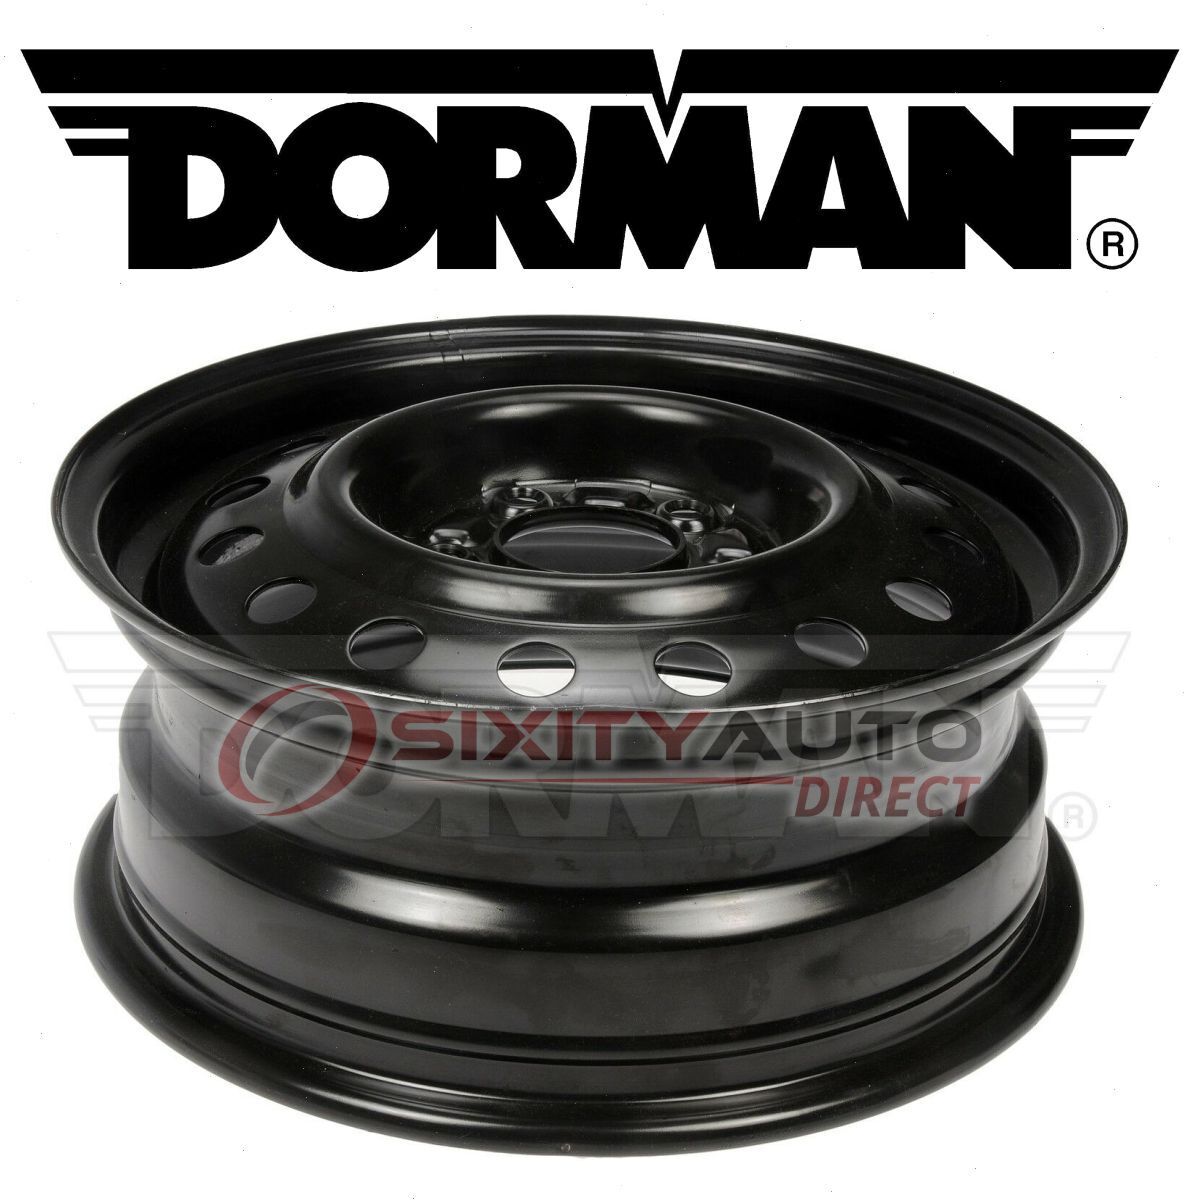 Dorman Wheel for 2001-2002 Pontiac Aztek Tire  om